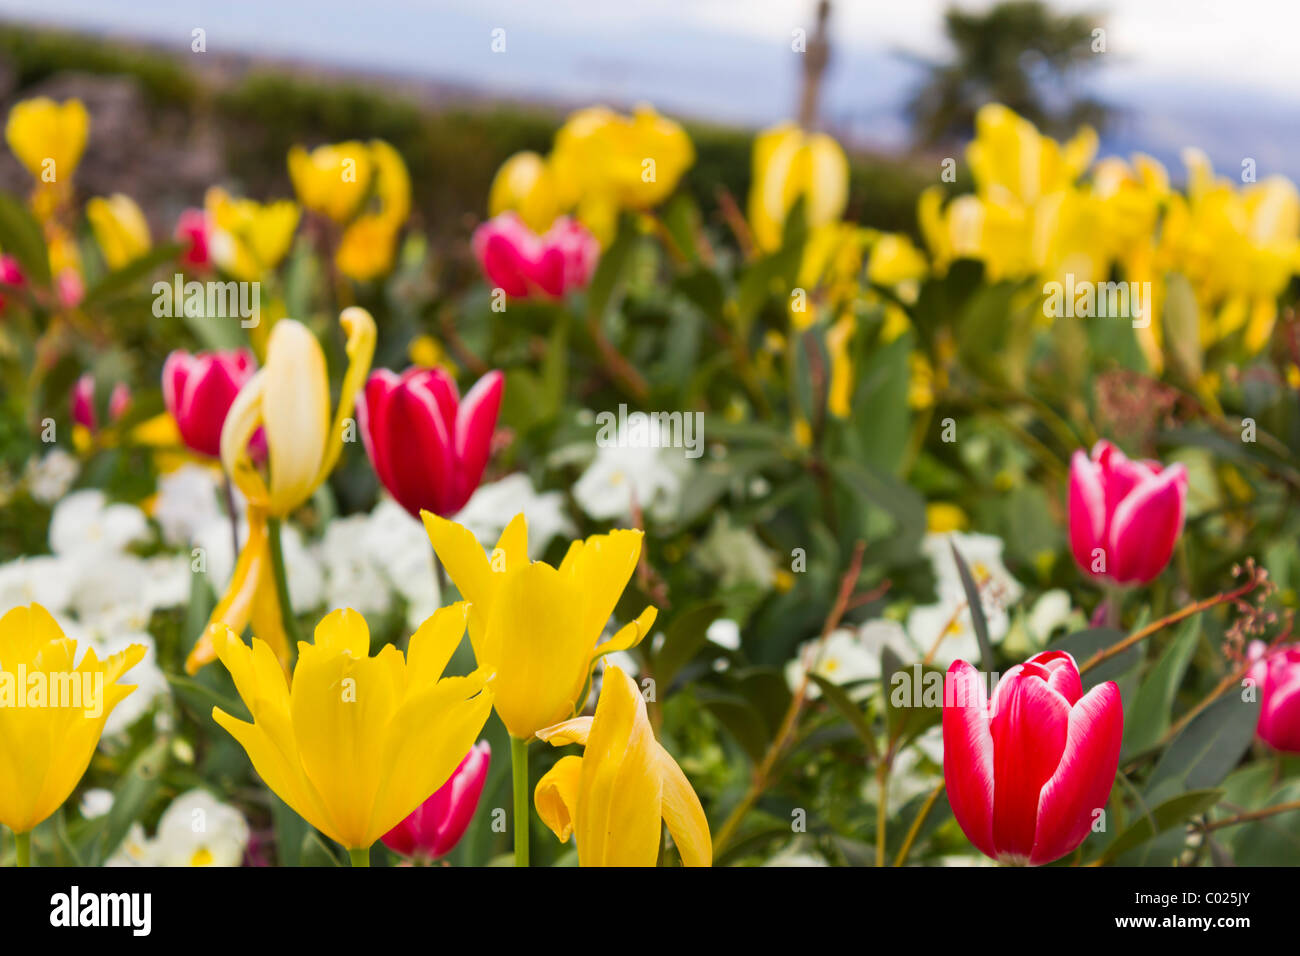 Tulips close up, selective focus Stock Photo